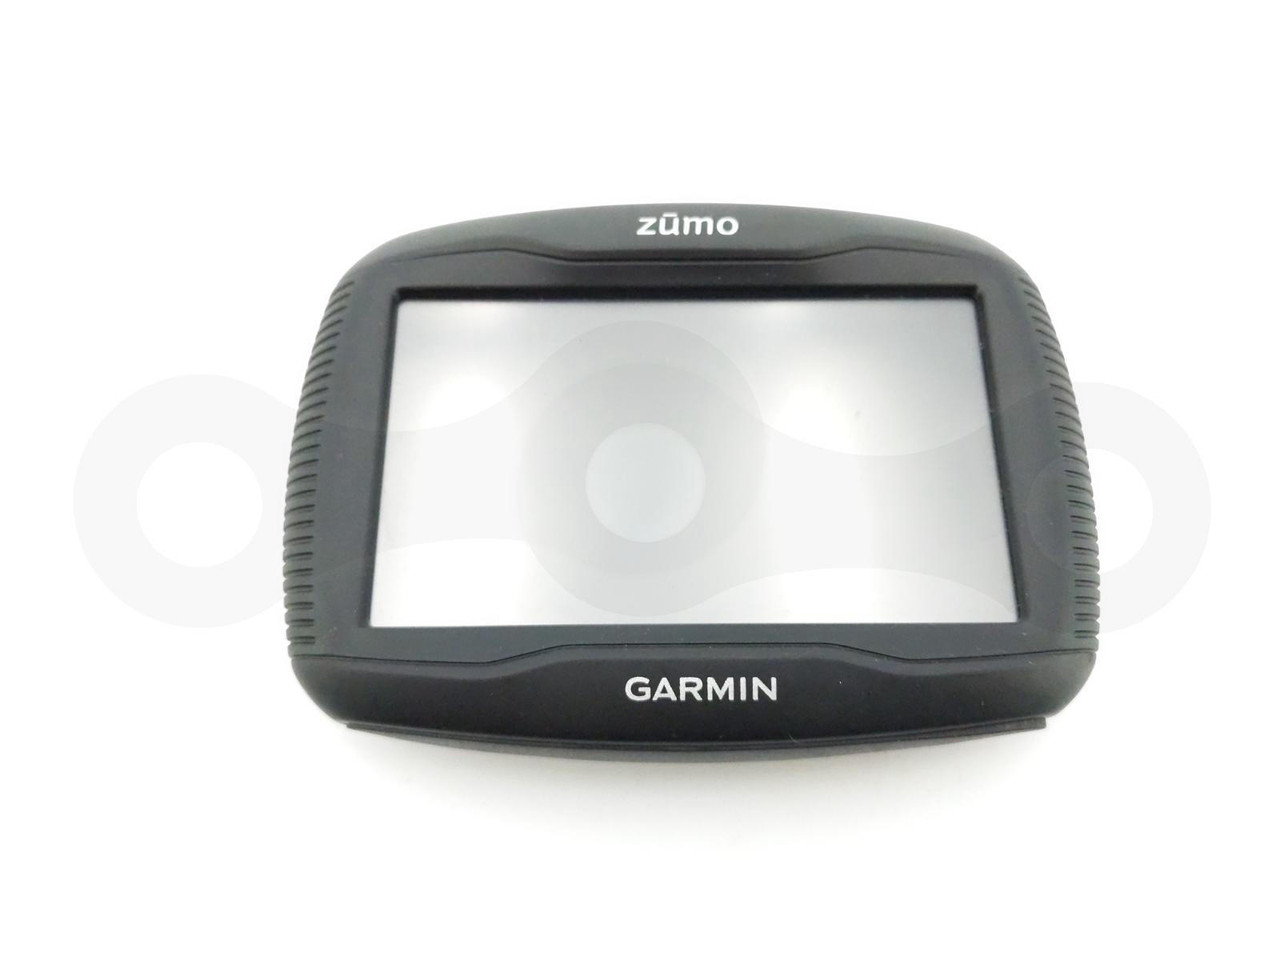 GARMIN ZUMO 350LM NAVIGATION CAR MOTORCYCLE GPS NAVIGATOR COMPACT PORTABLE  4.3"